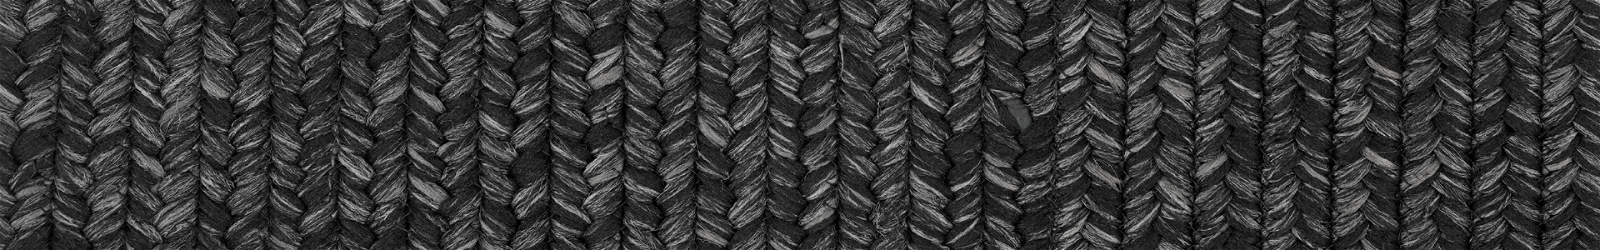 Black Braided Rugs